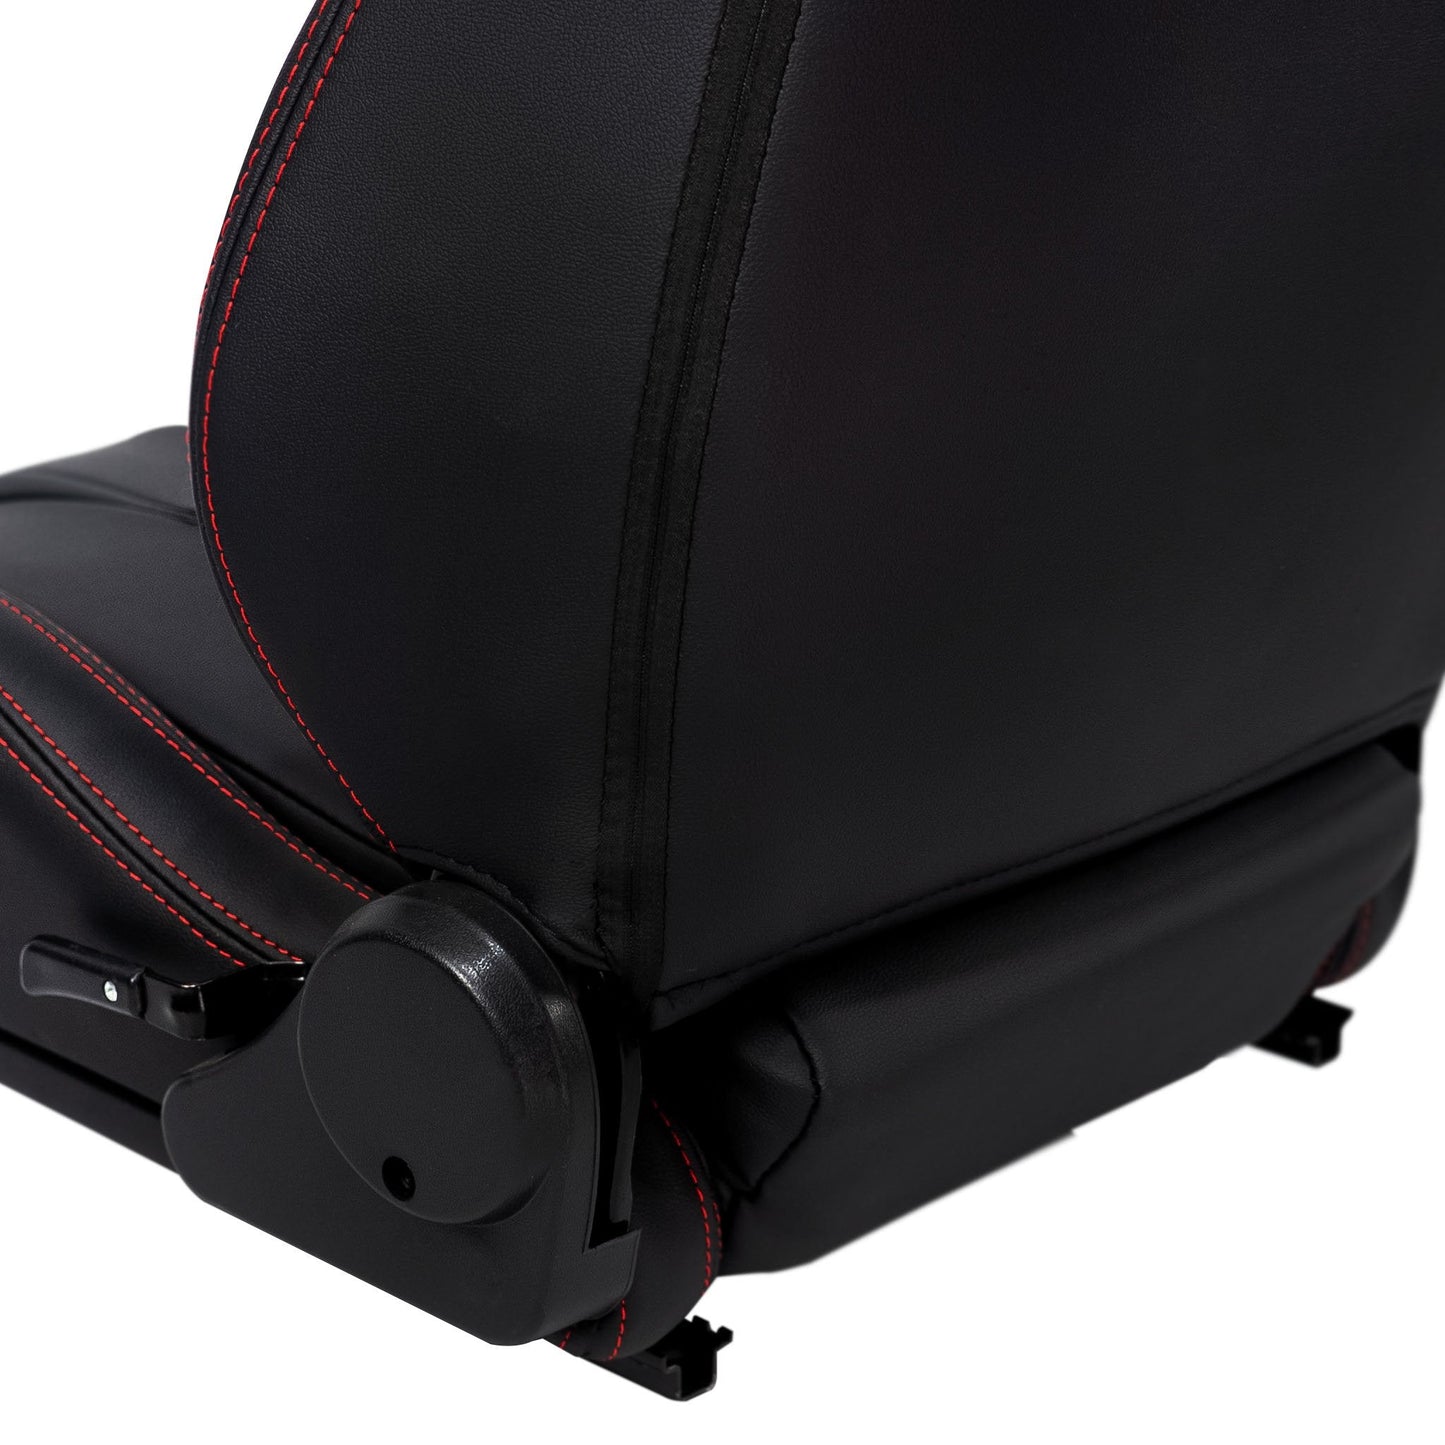 GT Omega RS9 Simulator Seat